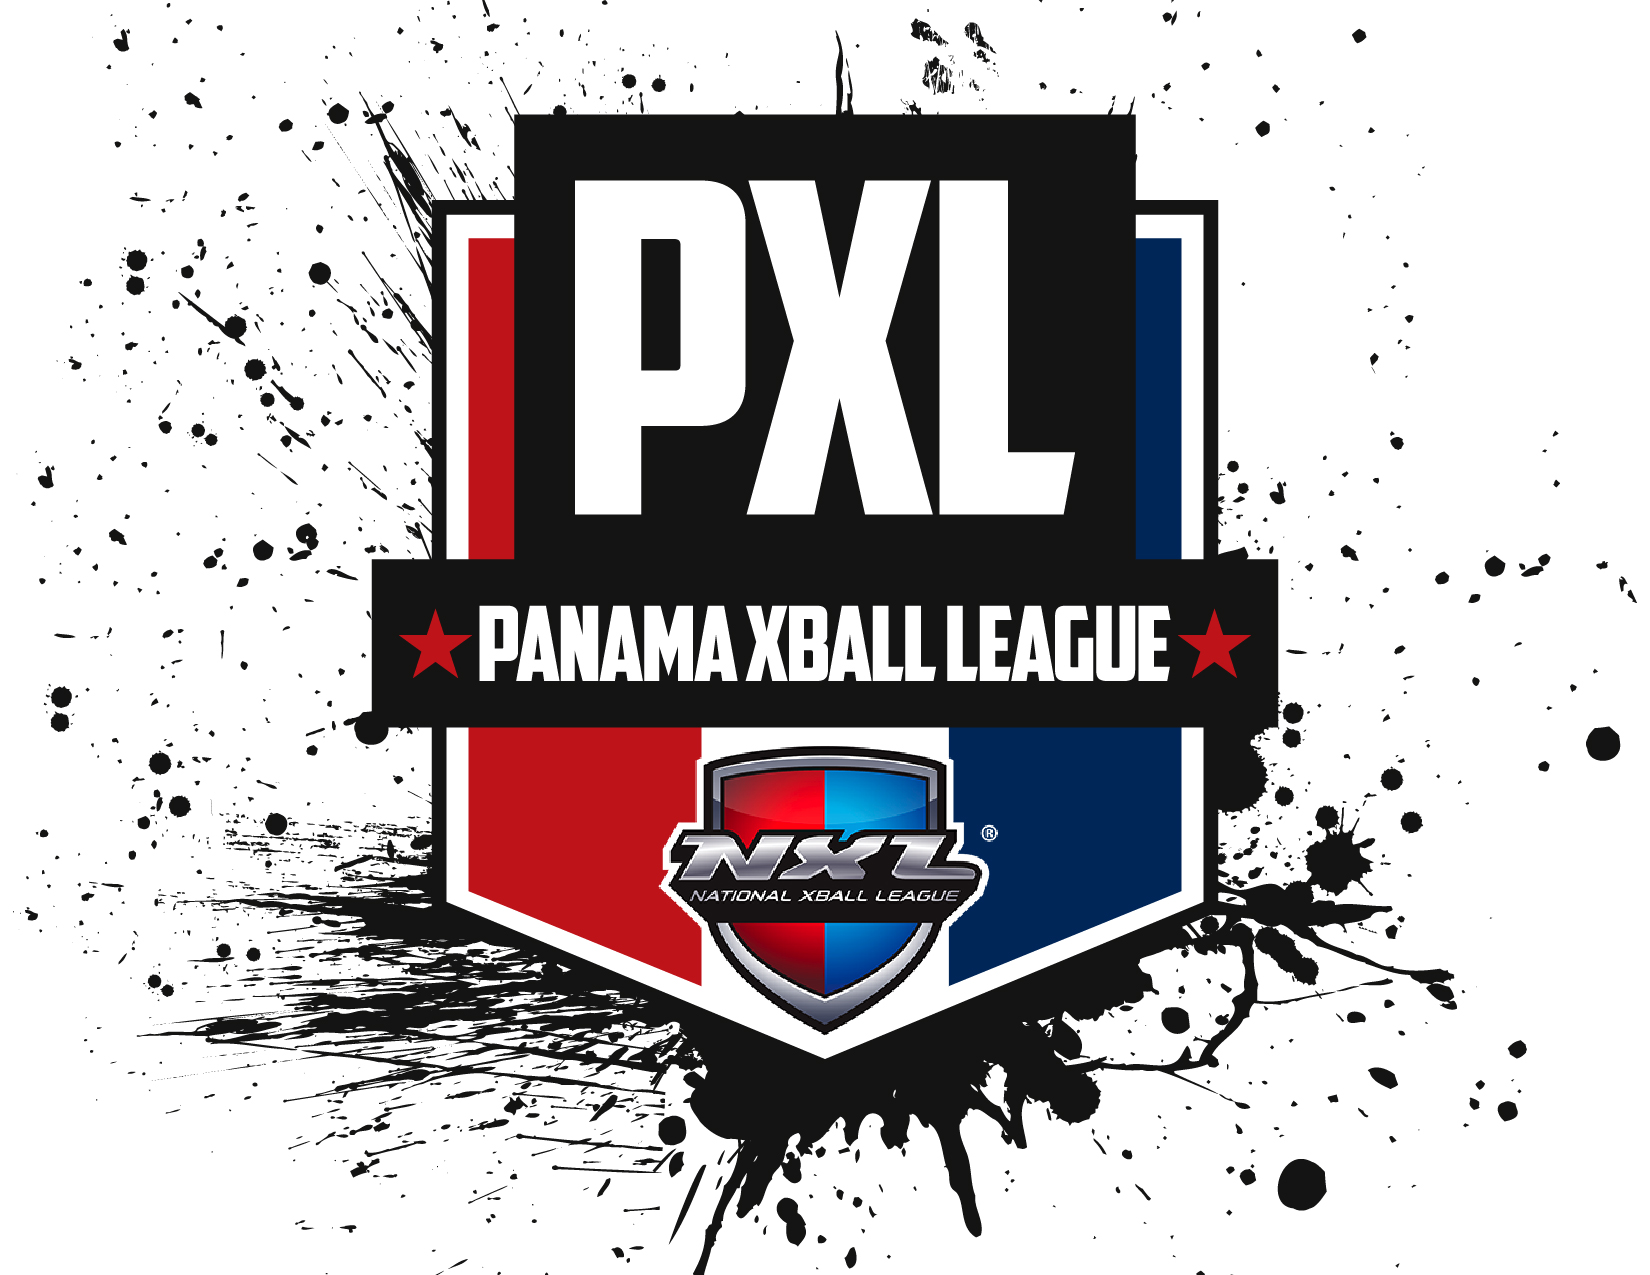 Panama Xball League